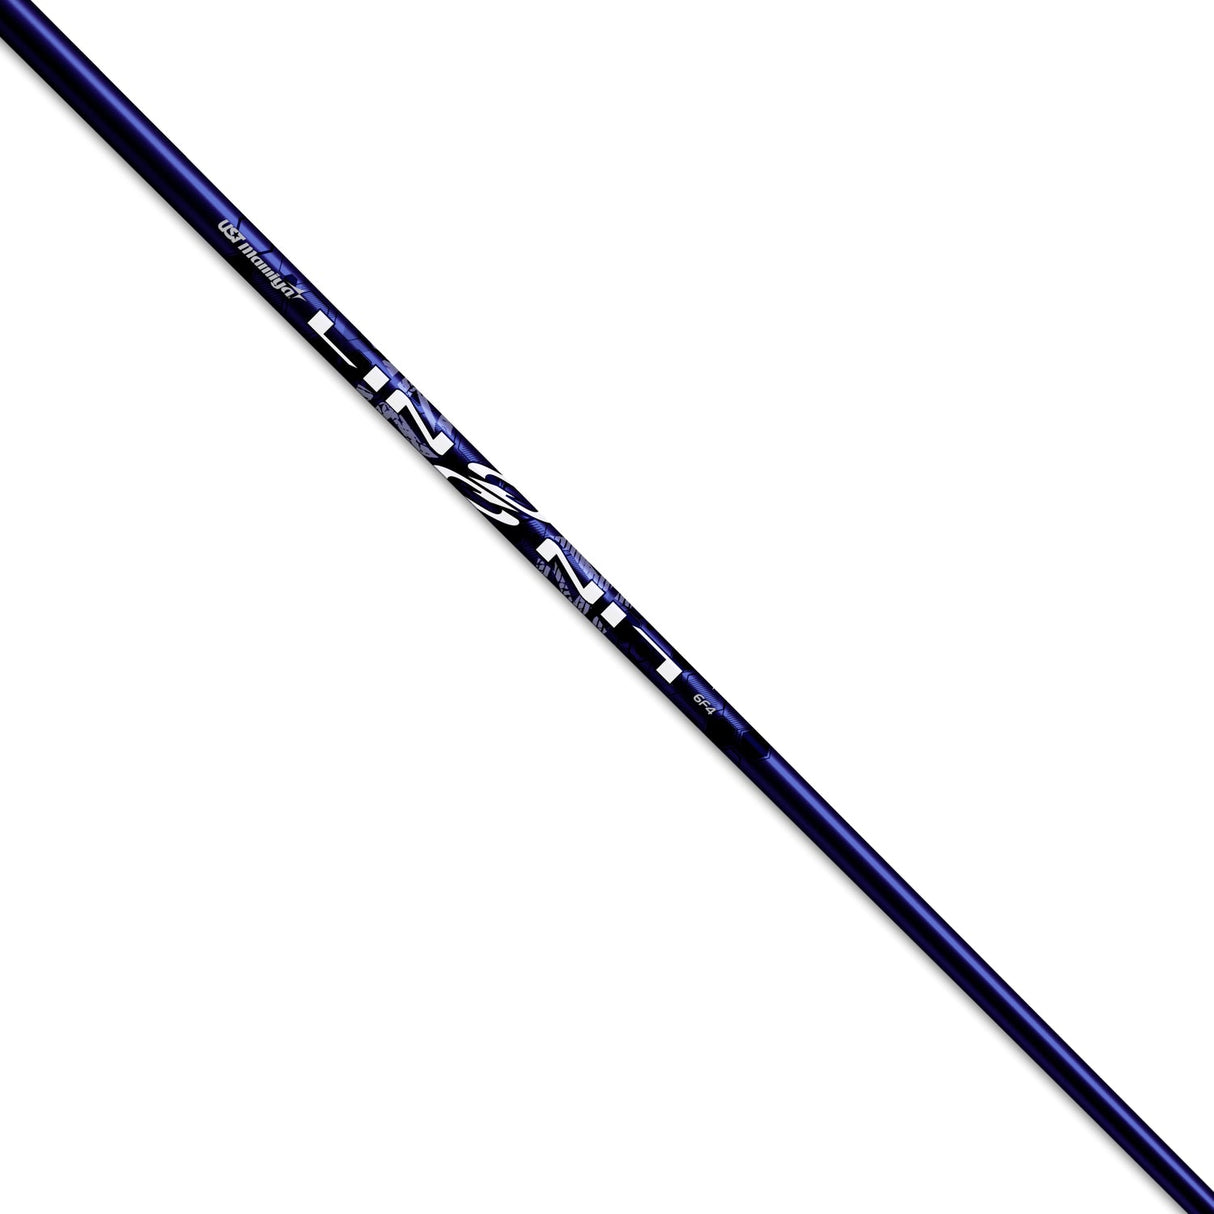 UST Lin-Q M40X TSPX Blue Graphite Shaft